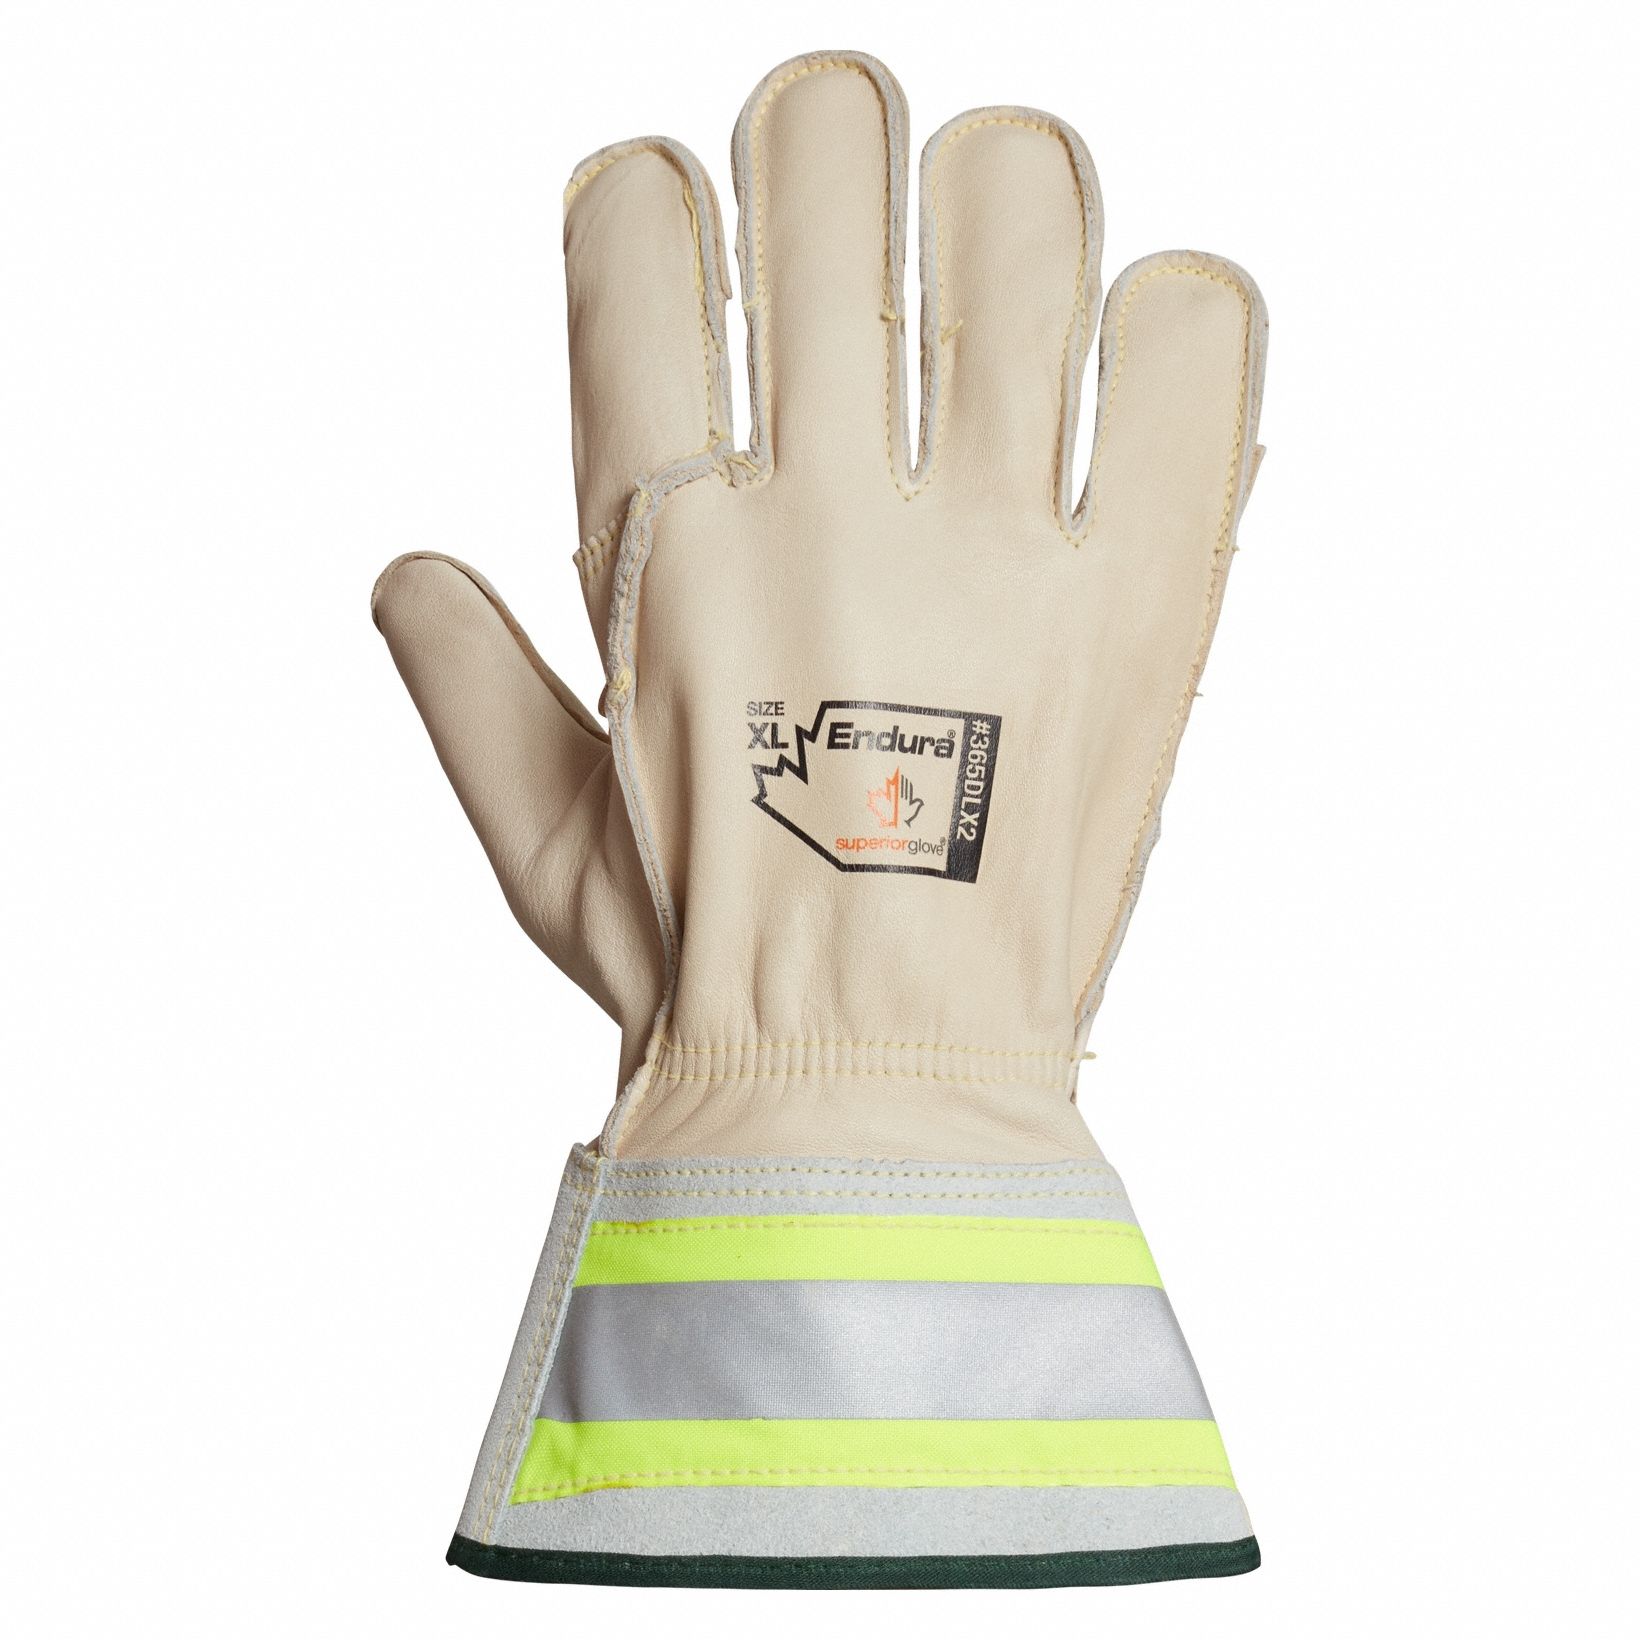 ENDURA 365DLX2L Gloves,White,L Glove Size,PR PK 5